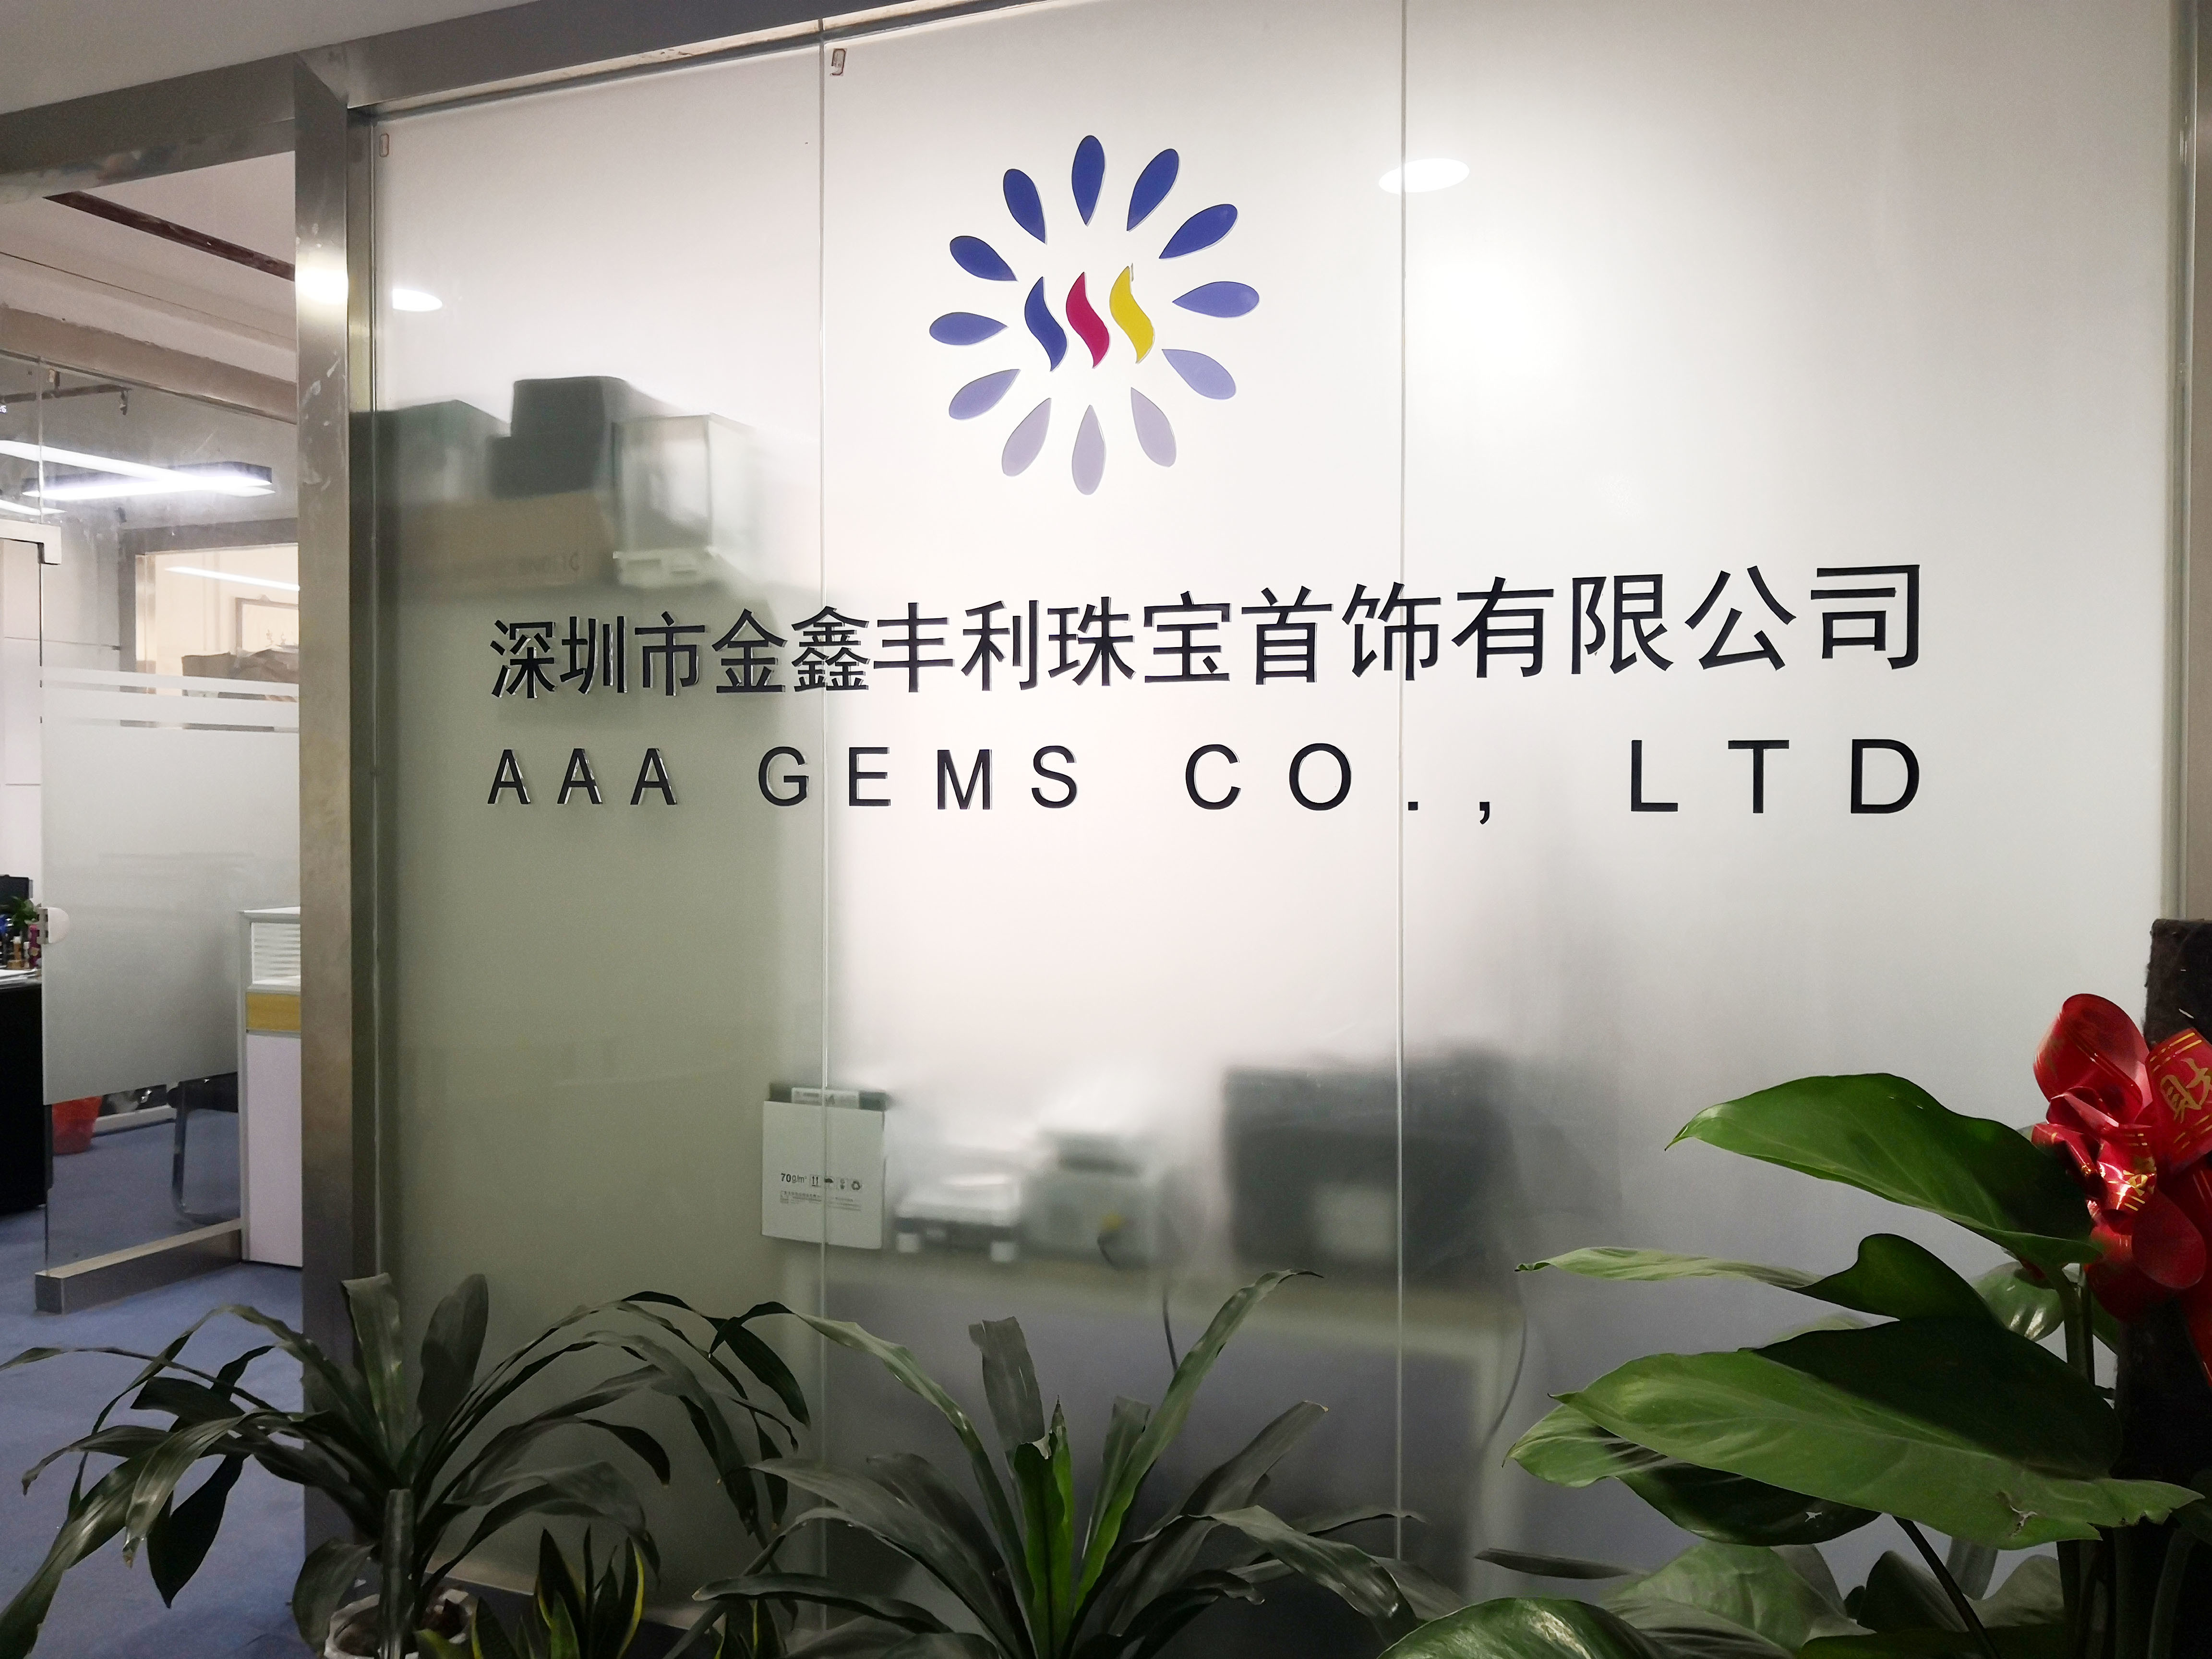 AAA Gems Co., Ltd